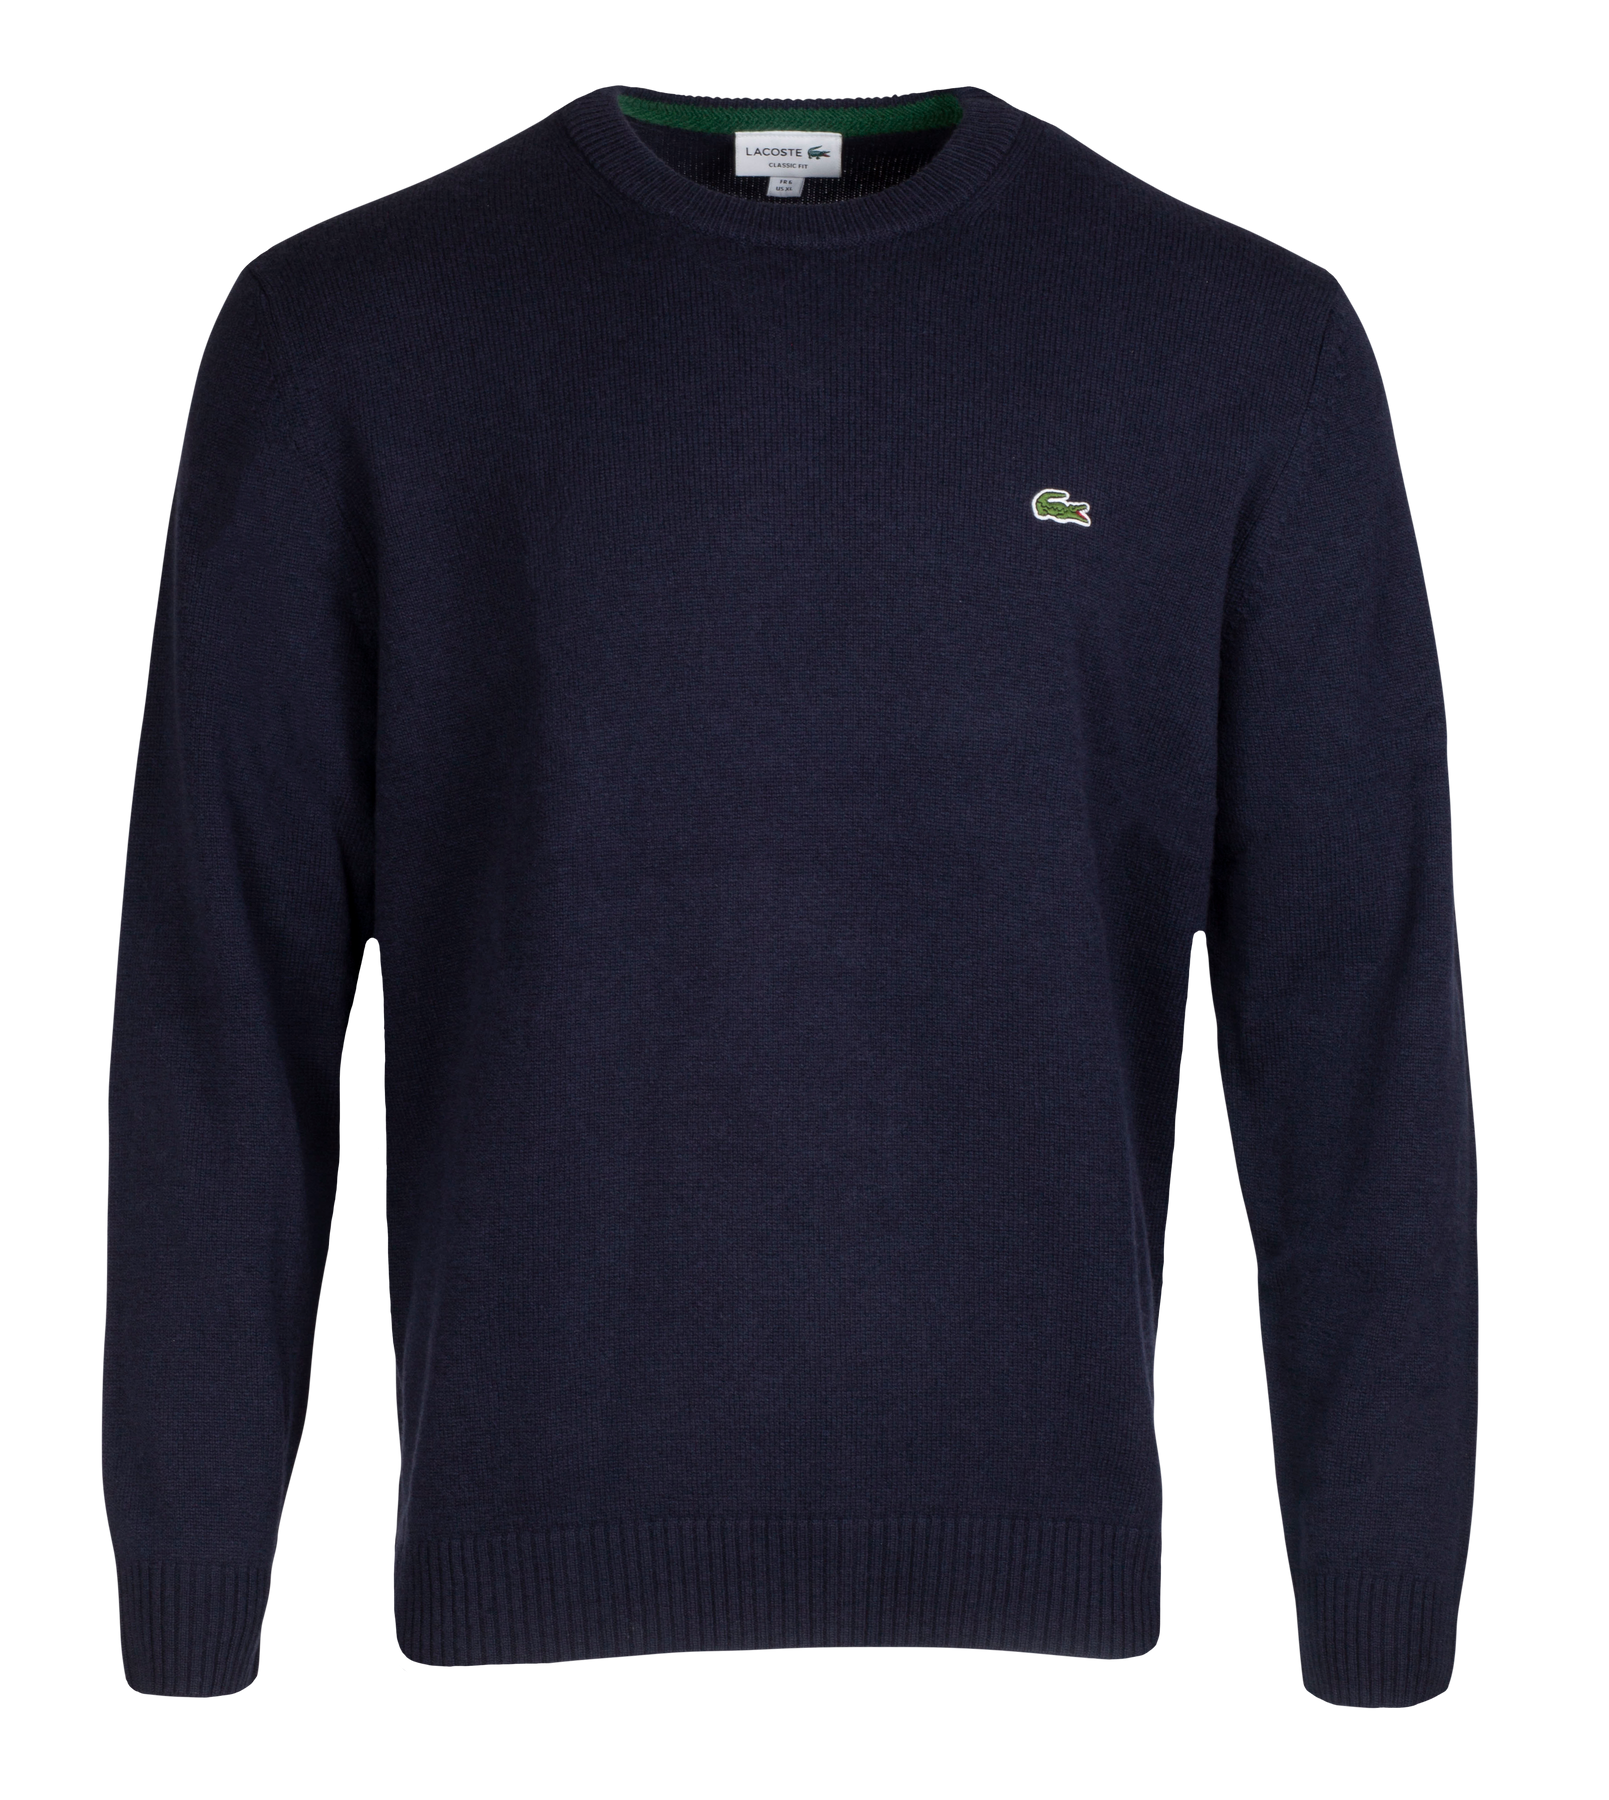 Lacoste Crew Neck Wool Sweater - Navy Blue